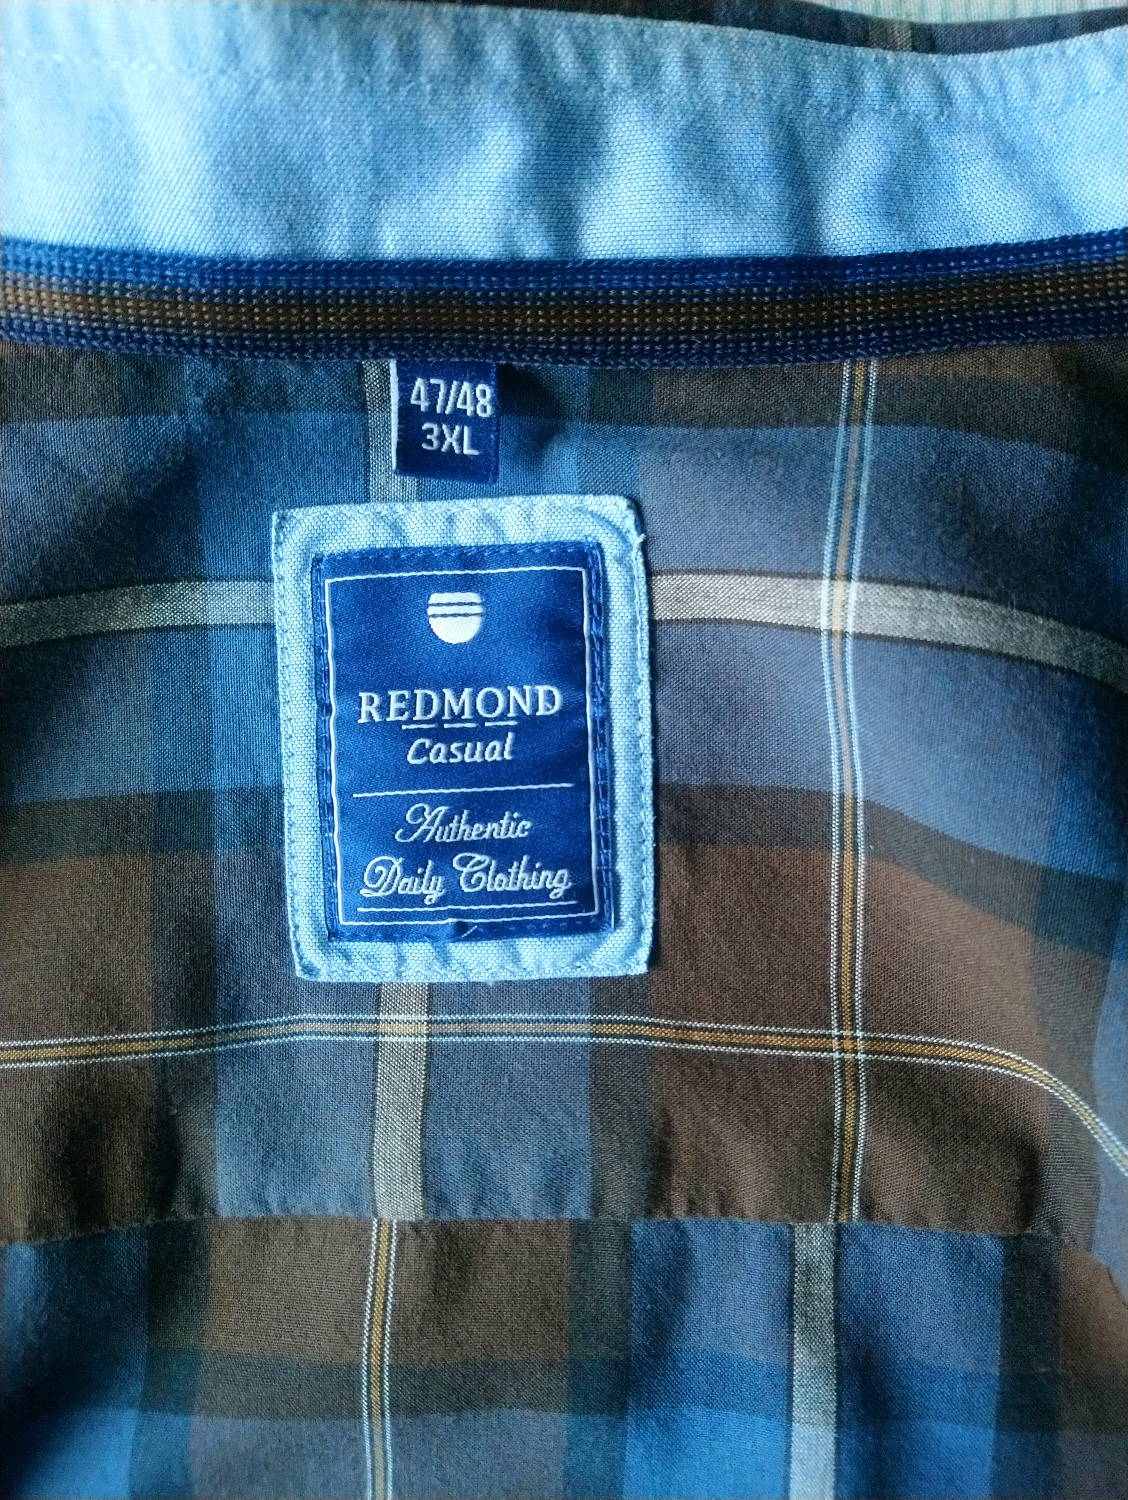 Camisa Redmond. Brown azul comprobado. Tamaño 3xl / xxxl.